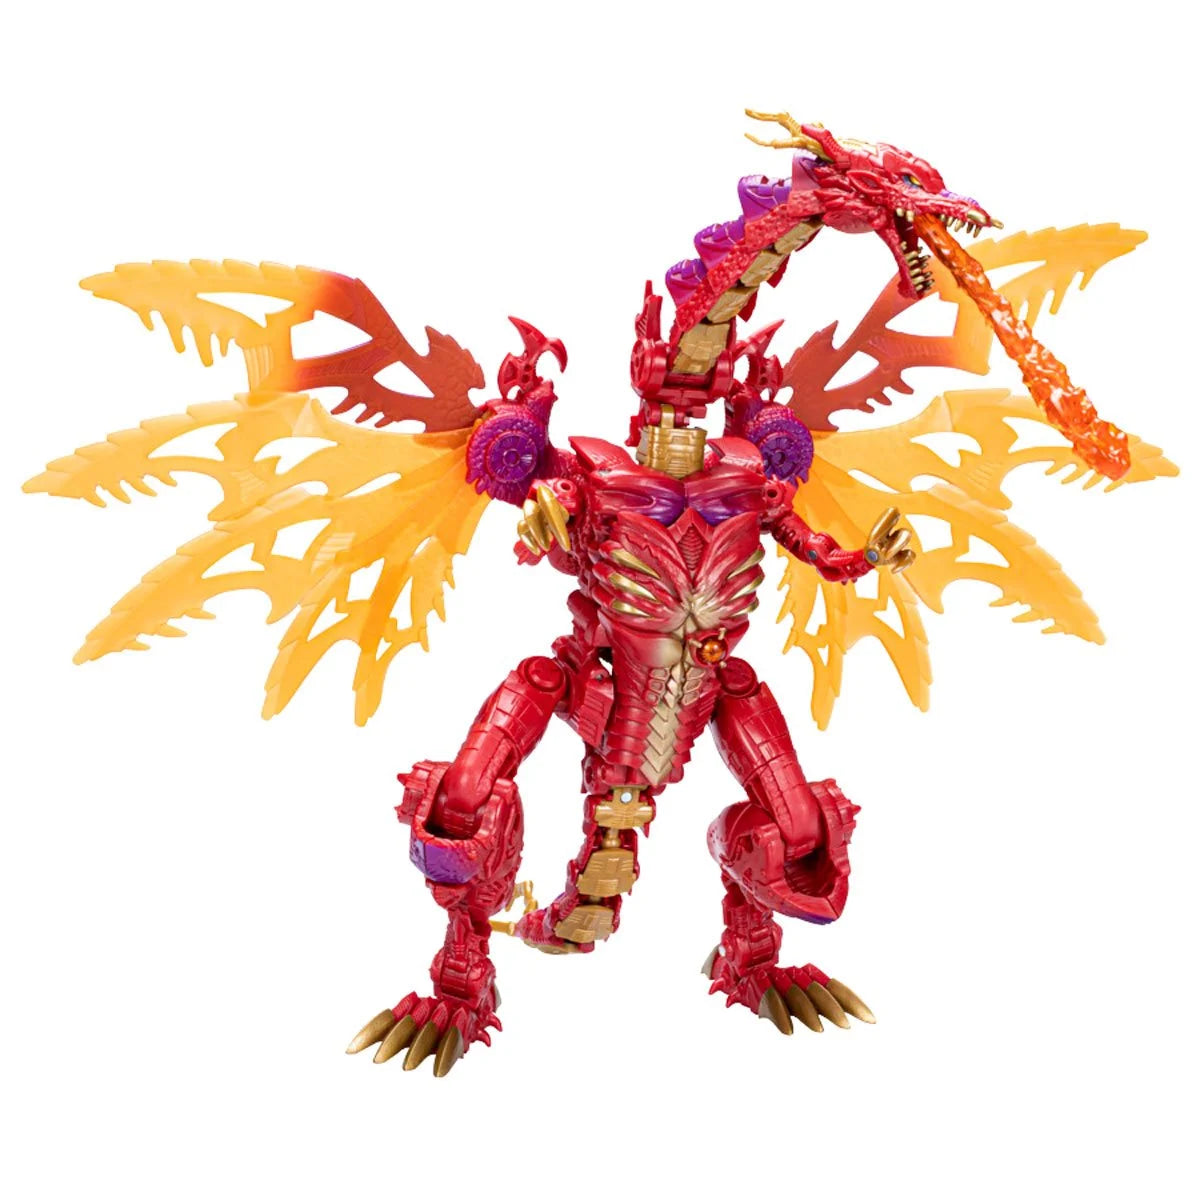 Transformers Generations Legacy Evolution Leader Transmetal II Megatron Action Figure Toy